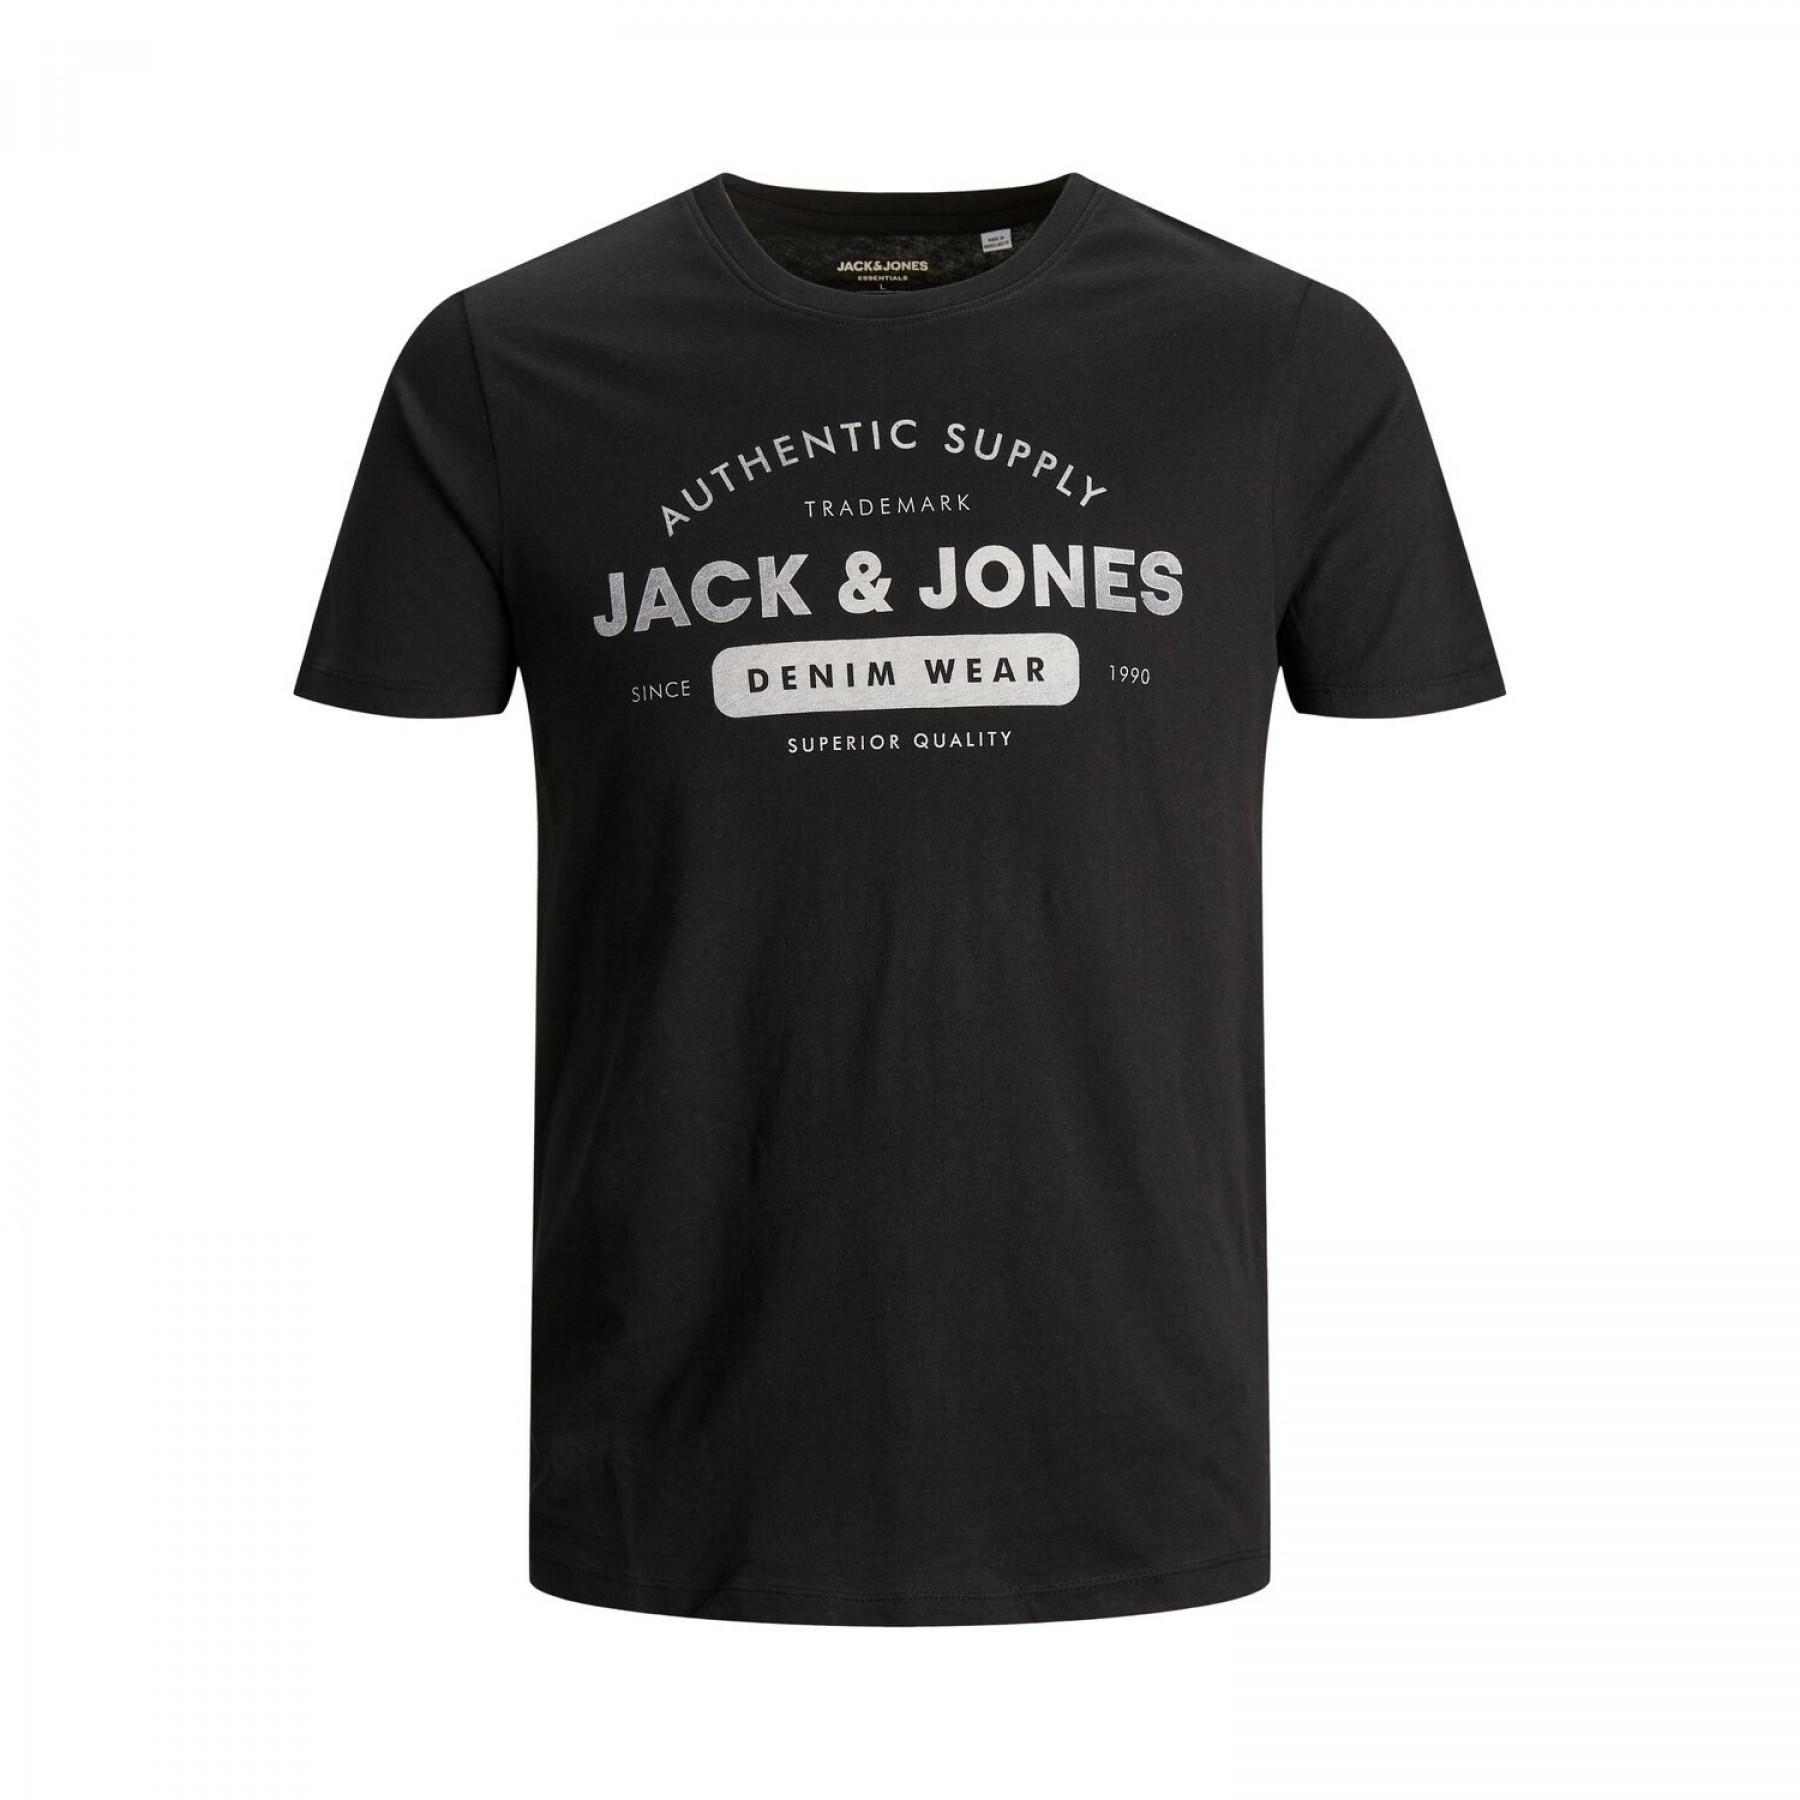 T-shirt Jack & Jones Jeans crew neck 20/21